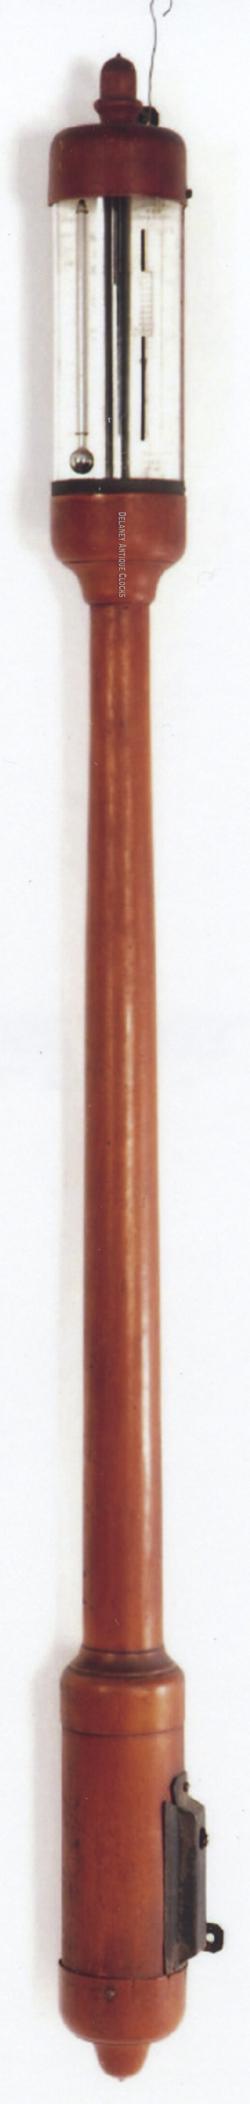 Charles Wilder of Peterborough, New Hampshire. A stick barometer. The baseball bat. 215068.